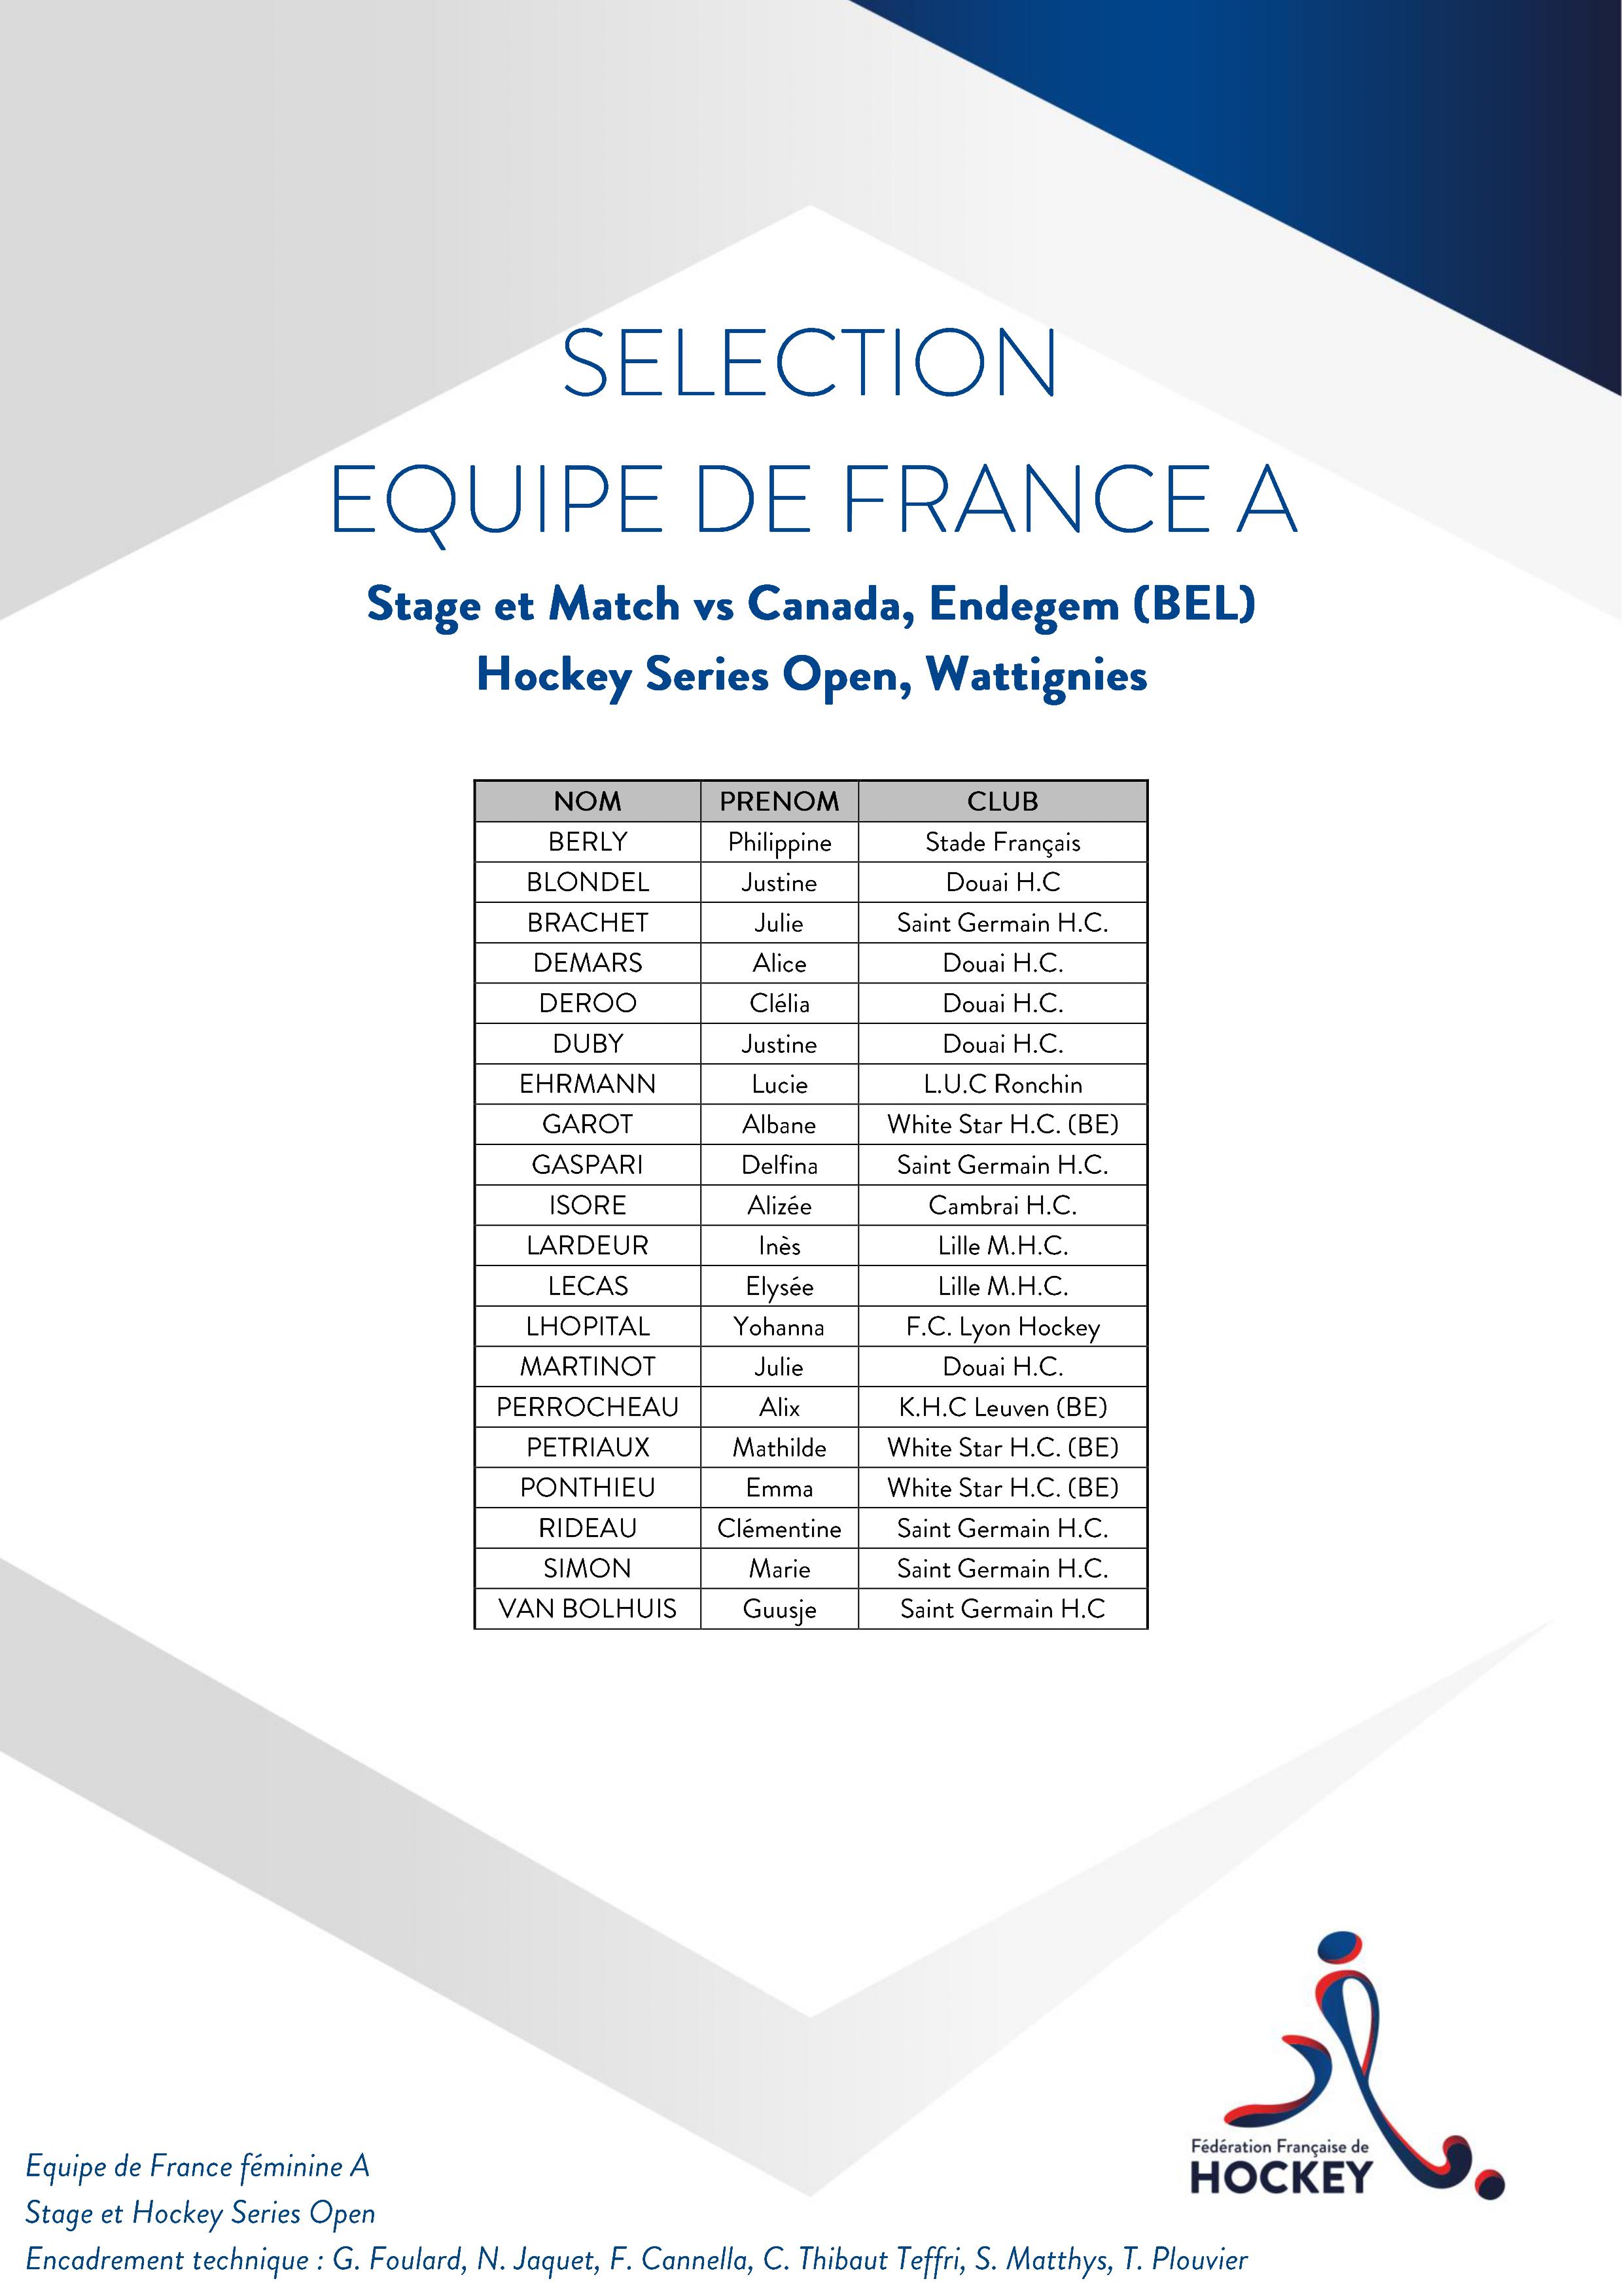 SELECTION EQUIPE DE FRANCE Hockey Series Open 30 juin au 8 juillet